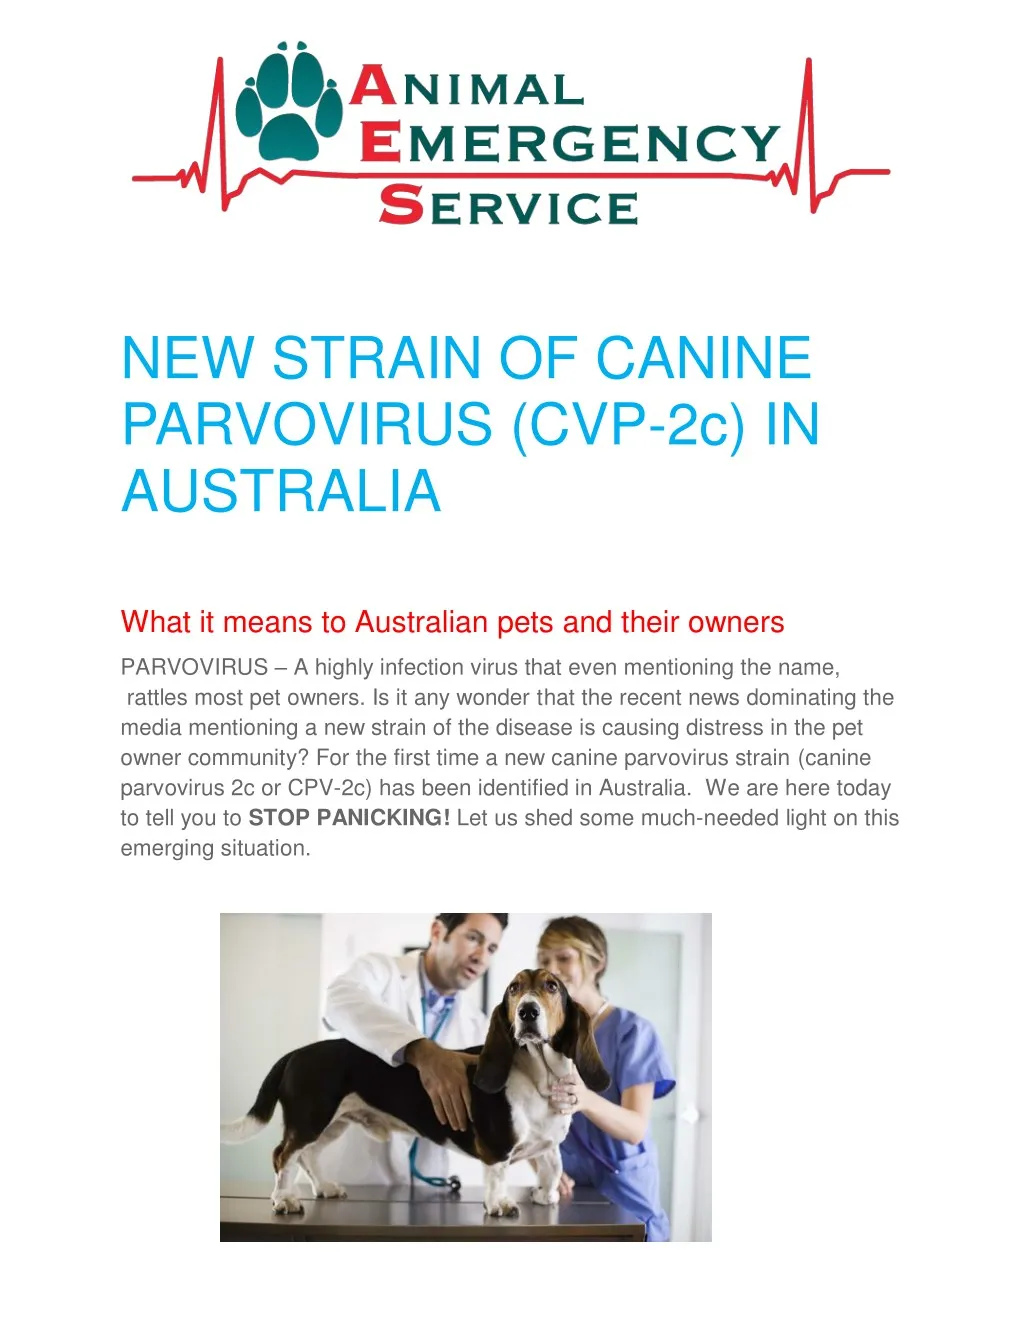 PPT NEW STRAIN OF CANINE PARVOVIRUS IN AUSTRALIA PowerPoint